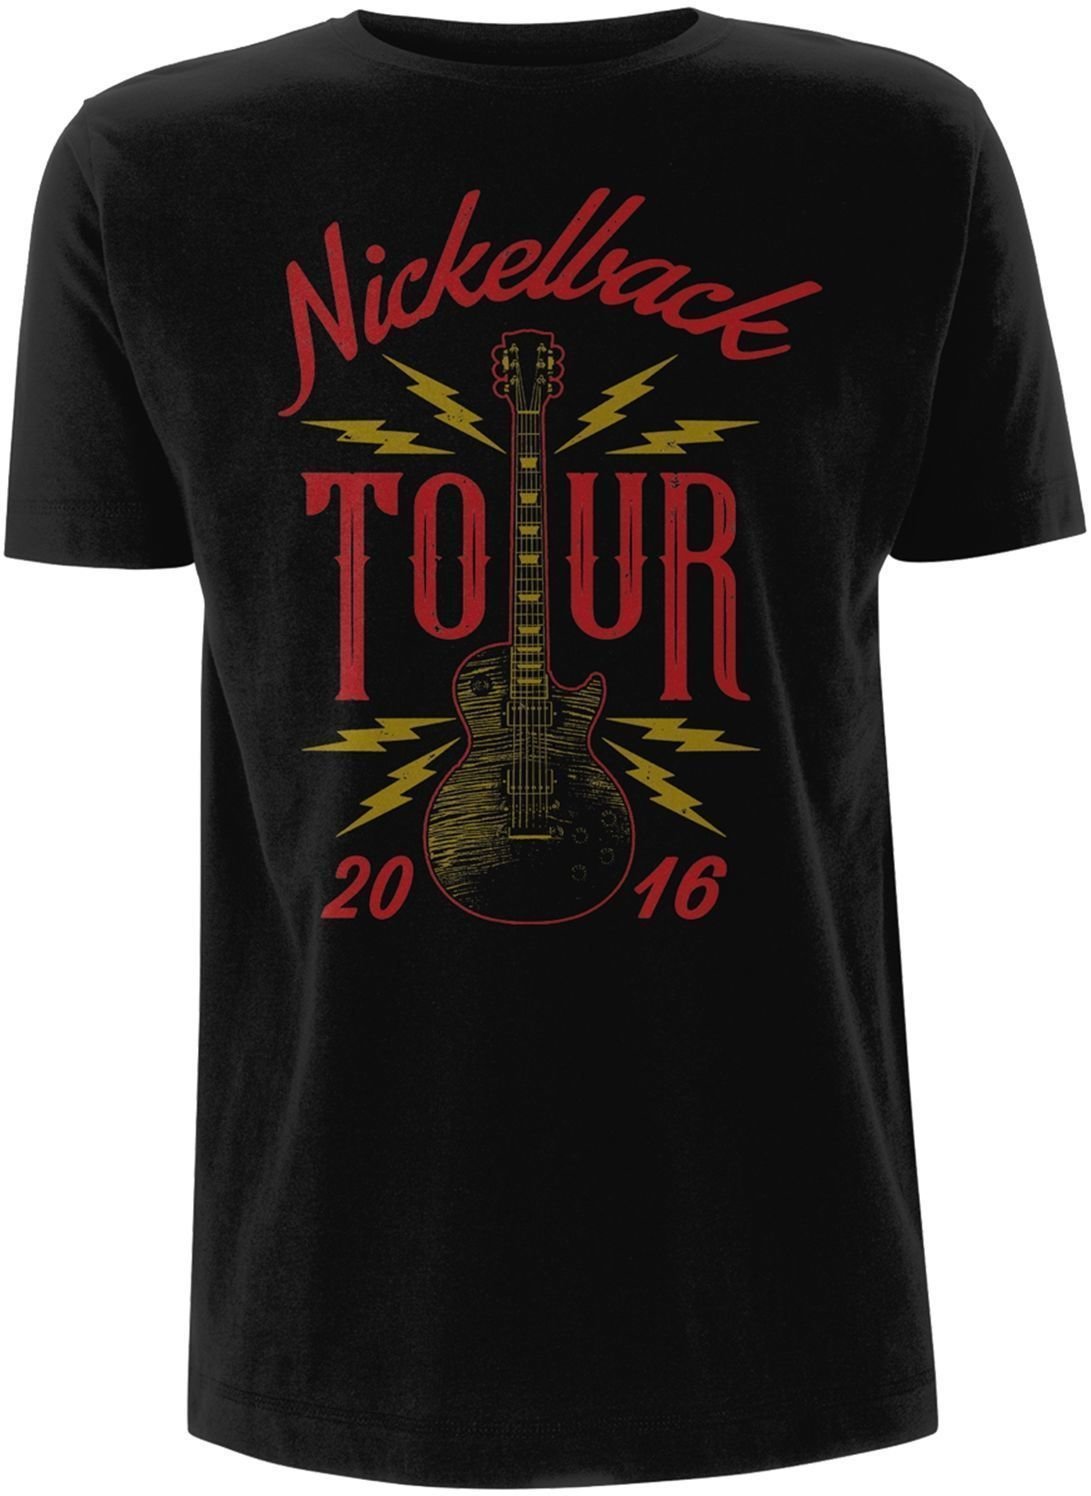 T-Shirt Nickelback T-Shirt Guitar Tour 2016 Black L